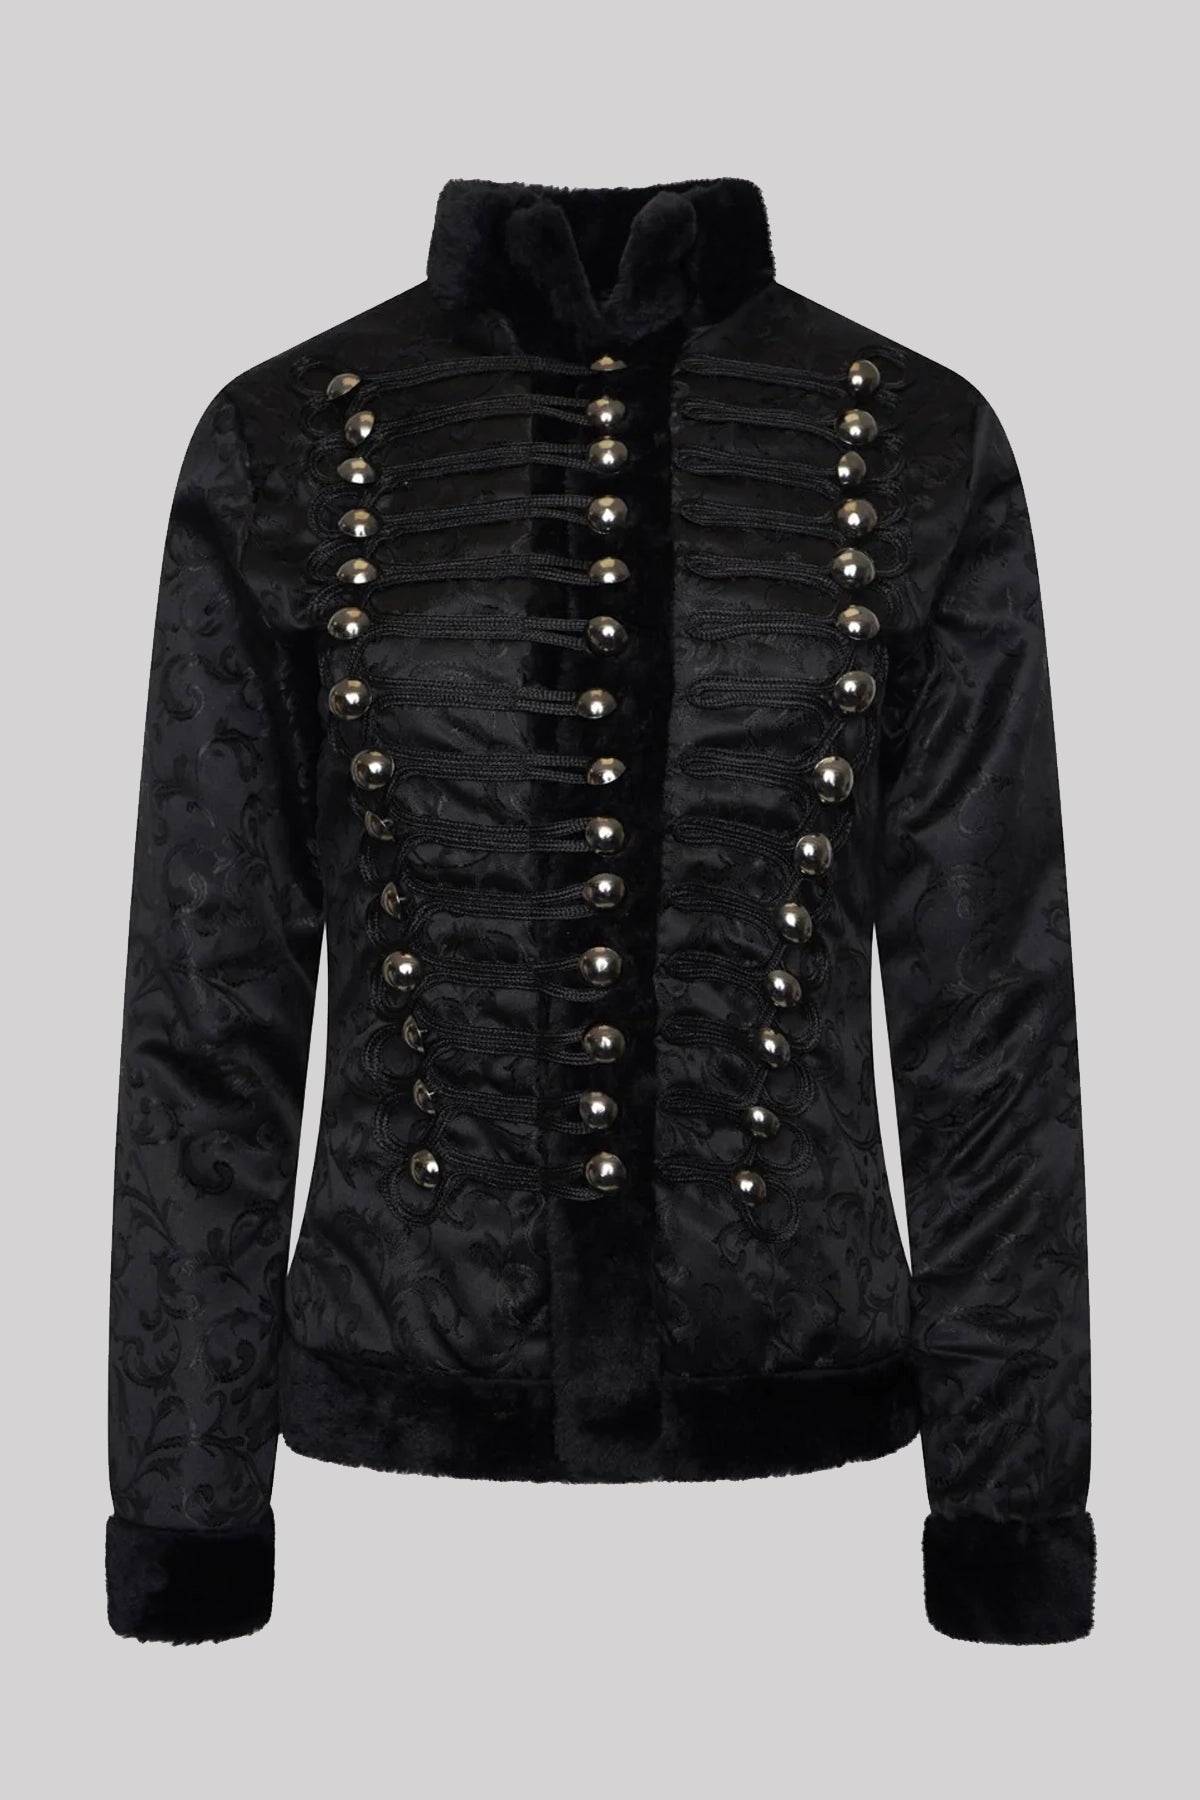 Ro Rox Women's Gothic Faux Fur Military Jacket